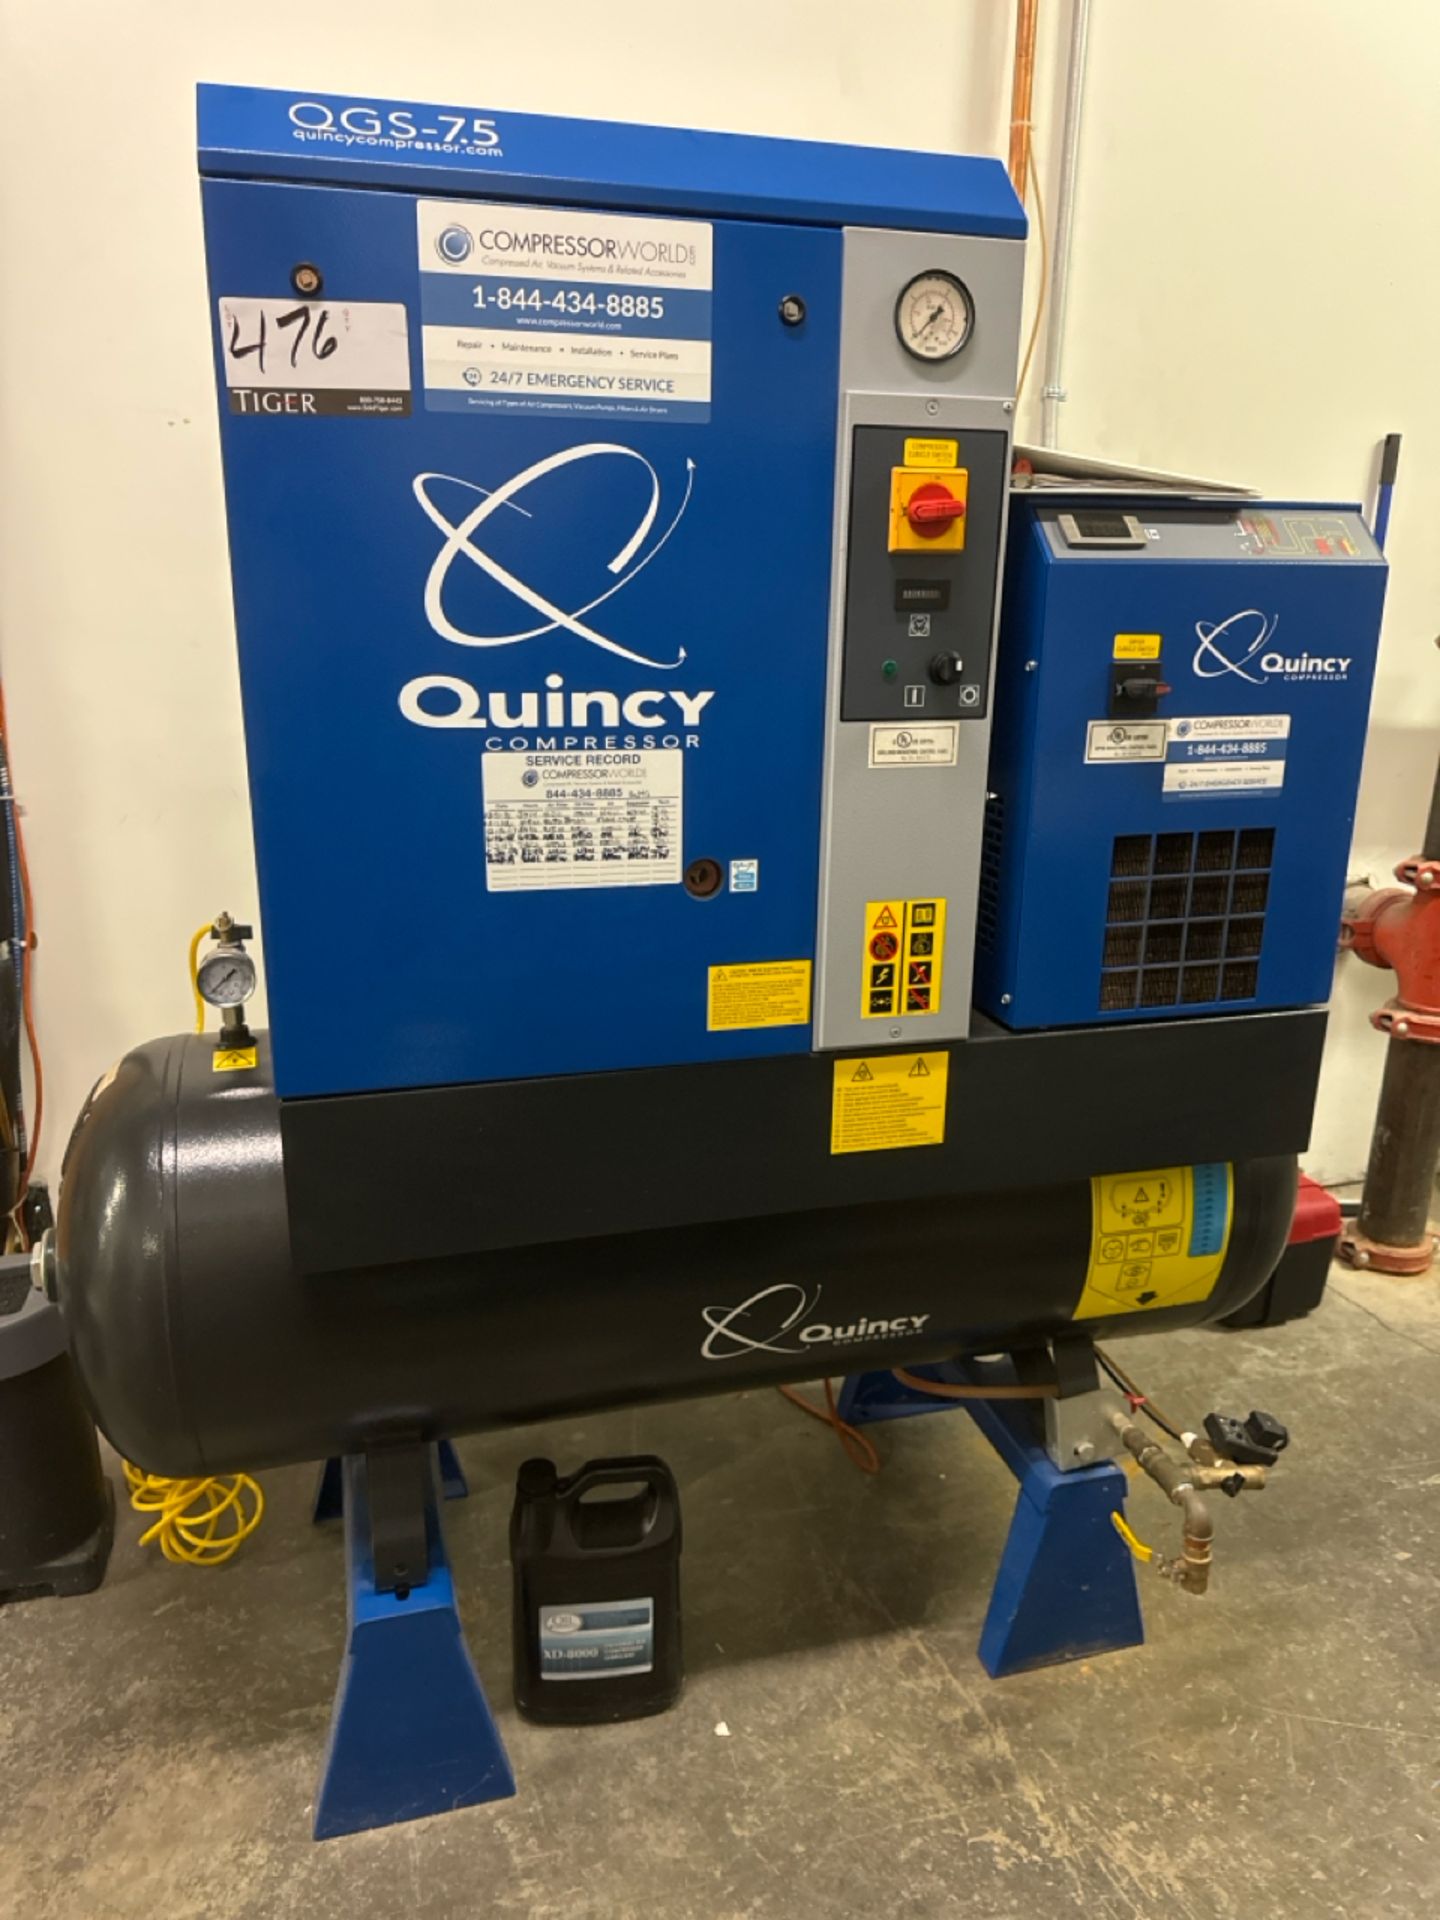 Quincy Rotary Screw Compressor